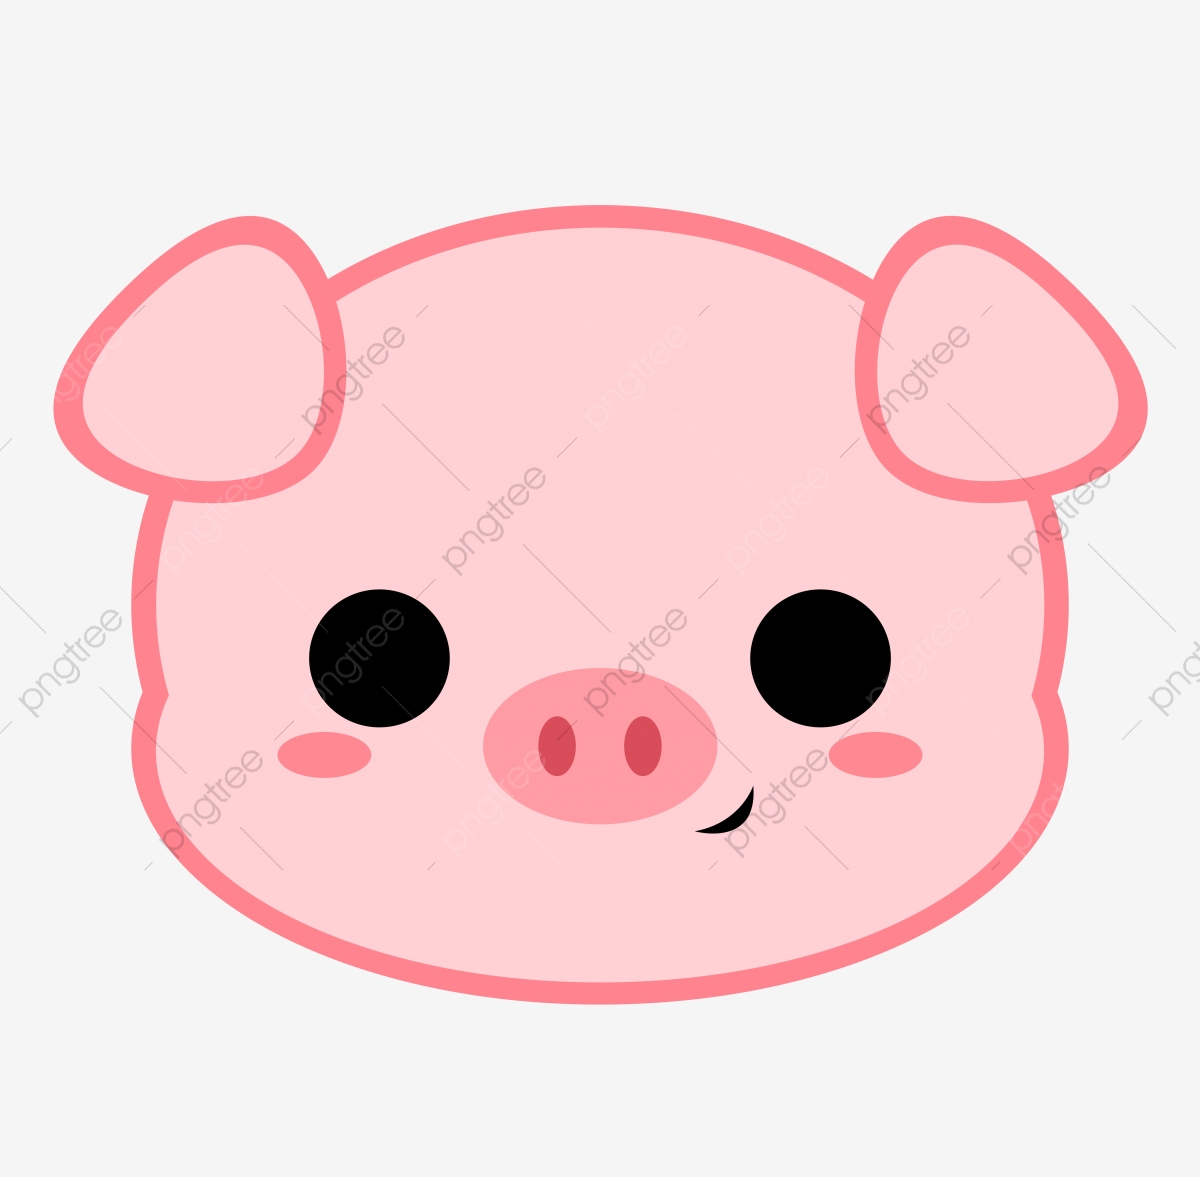 Download Free png Cartoon Pig Head, Pig, Piggy, Animal PNG